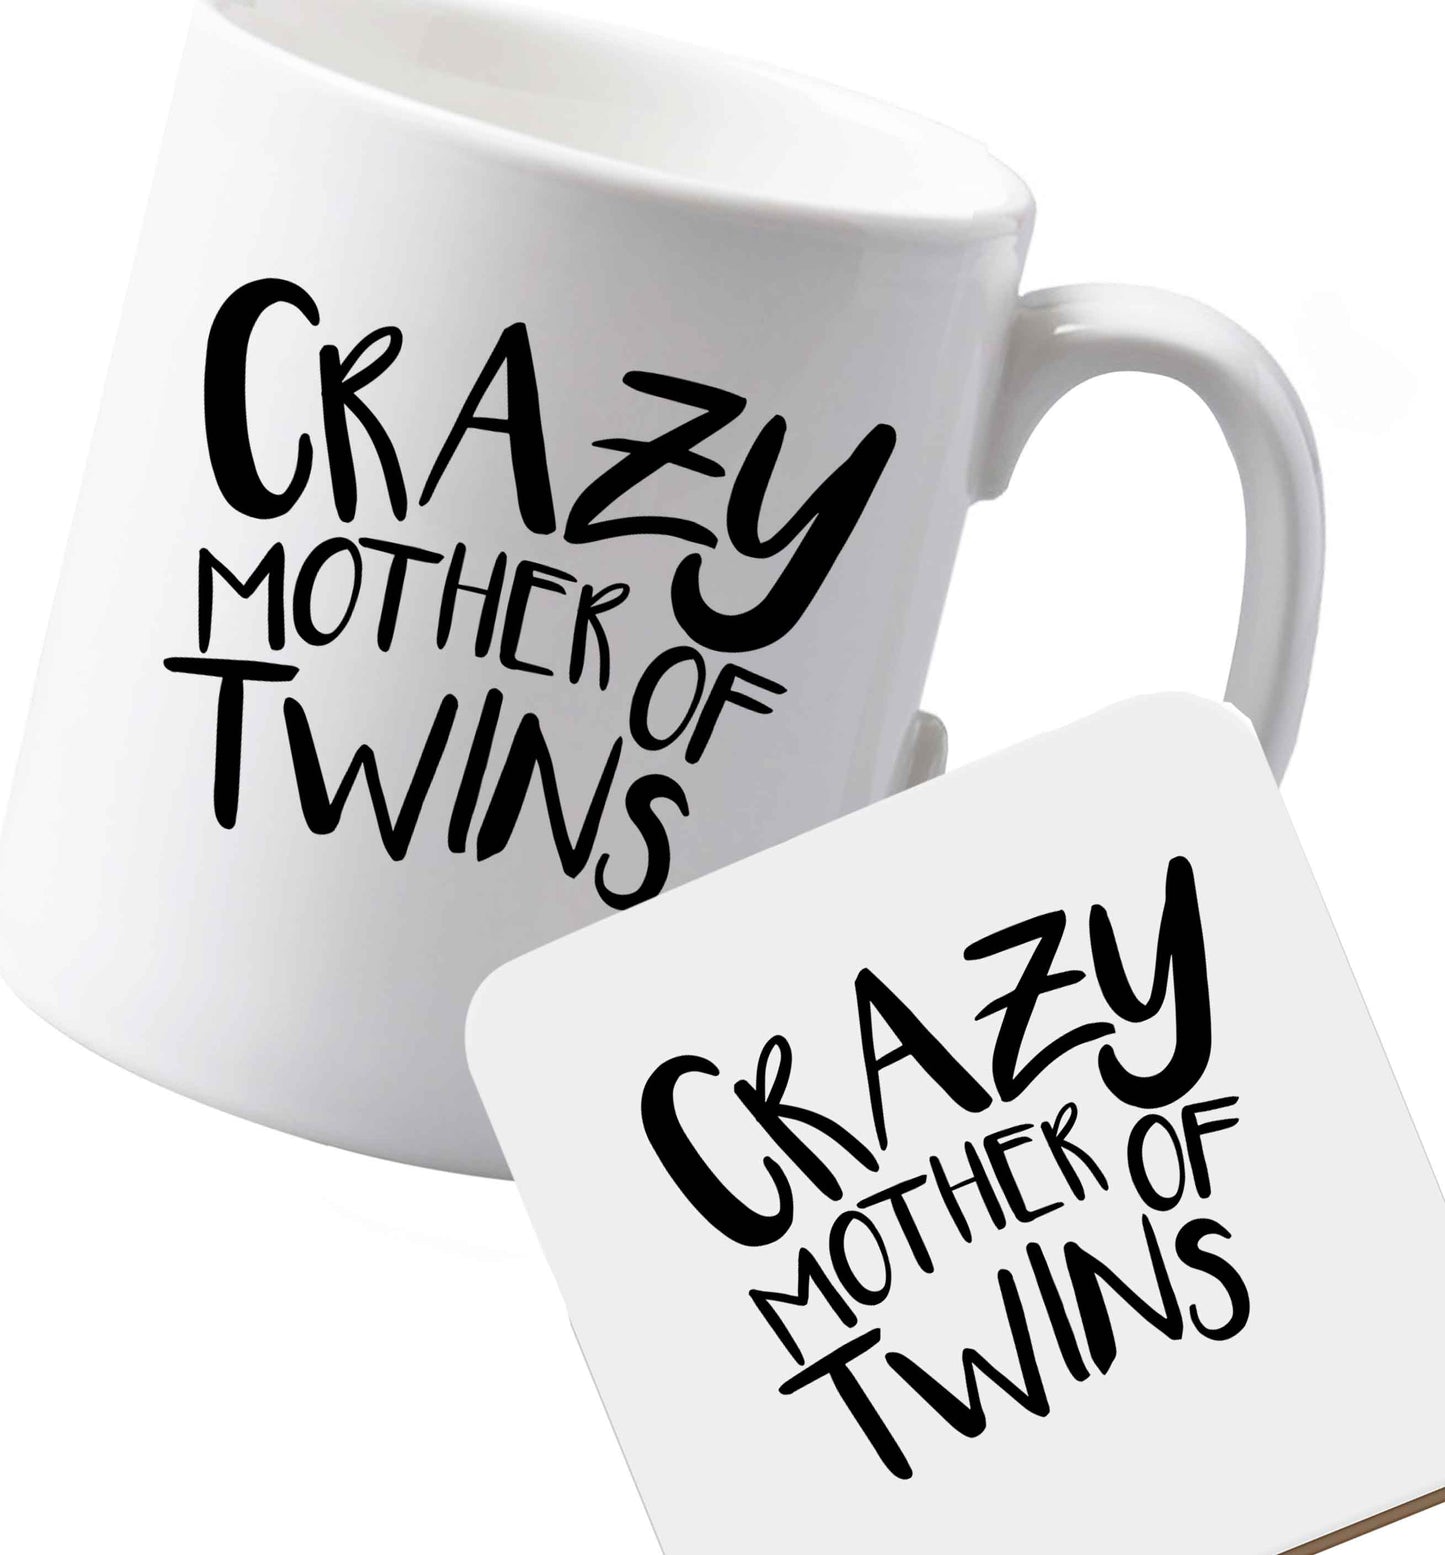 10 oz Ceramic mug and coaster Crazy mother of twins both sides